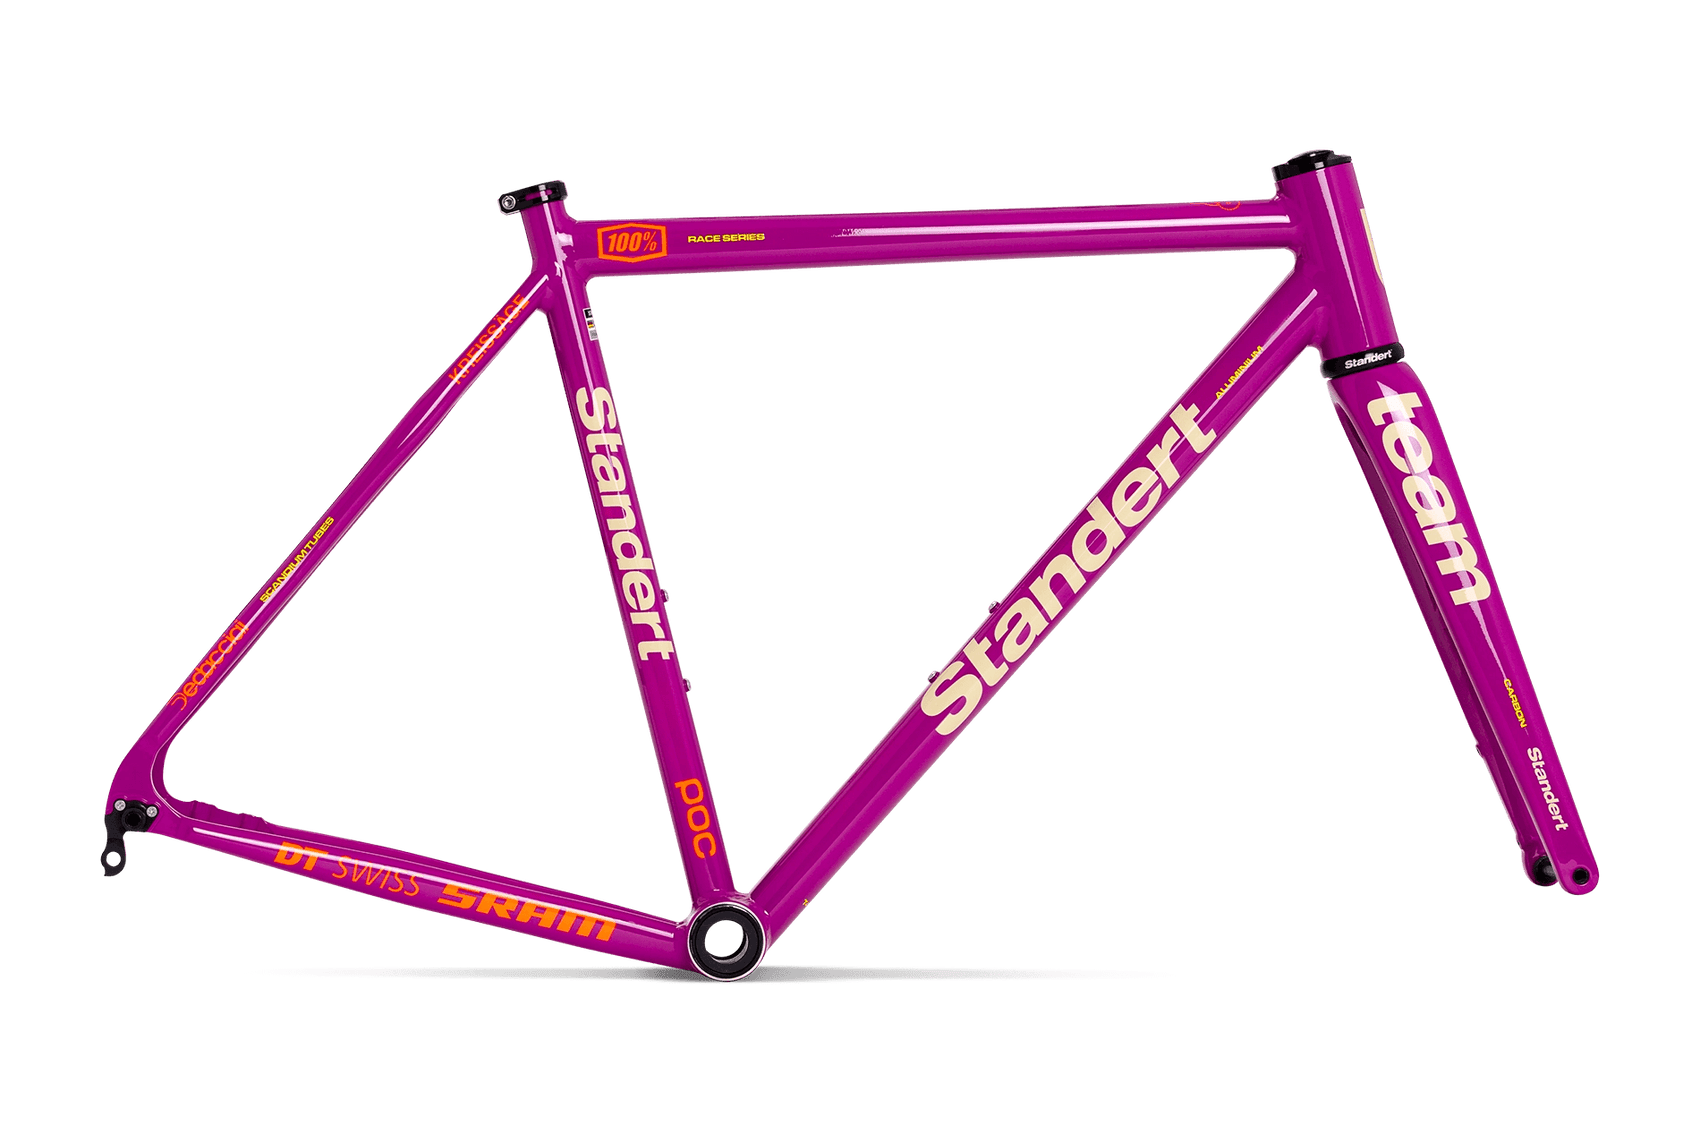 Kreissage RS Team Road Bike Frame Made from Aluminium